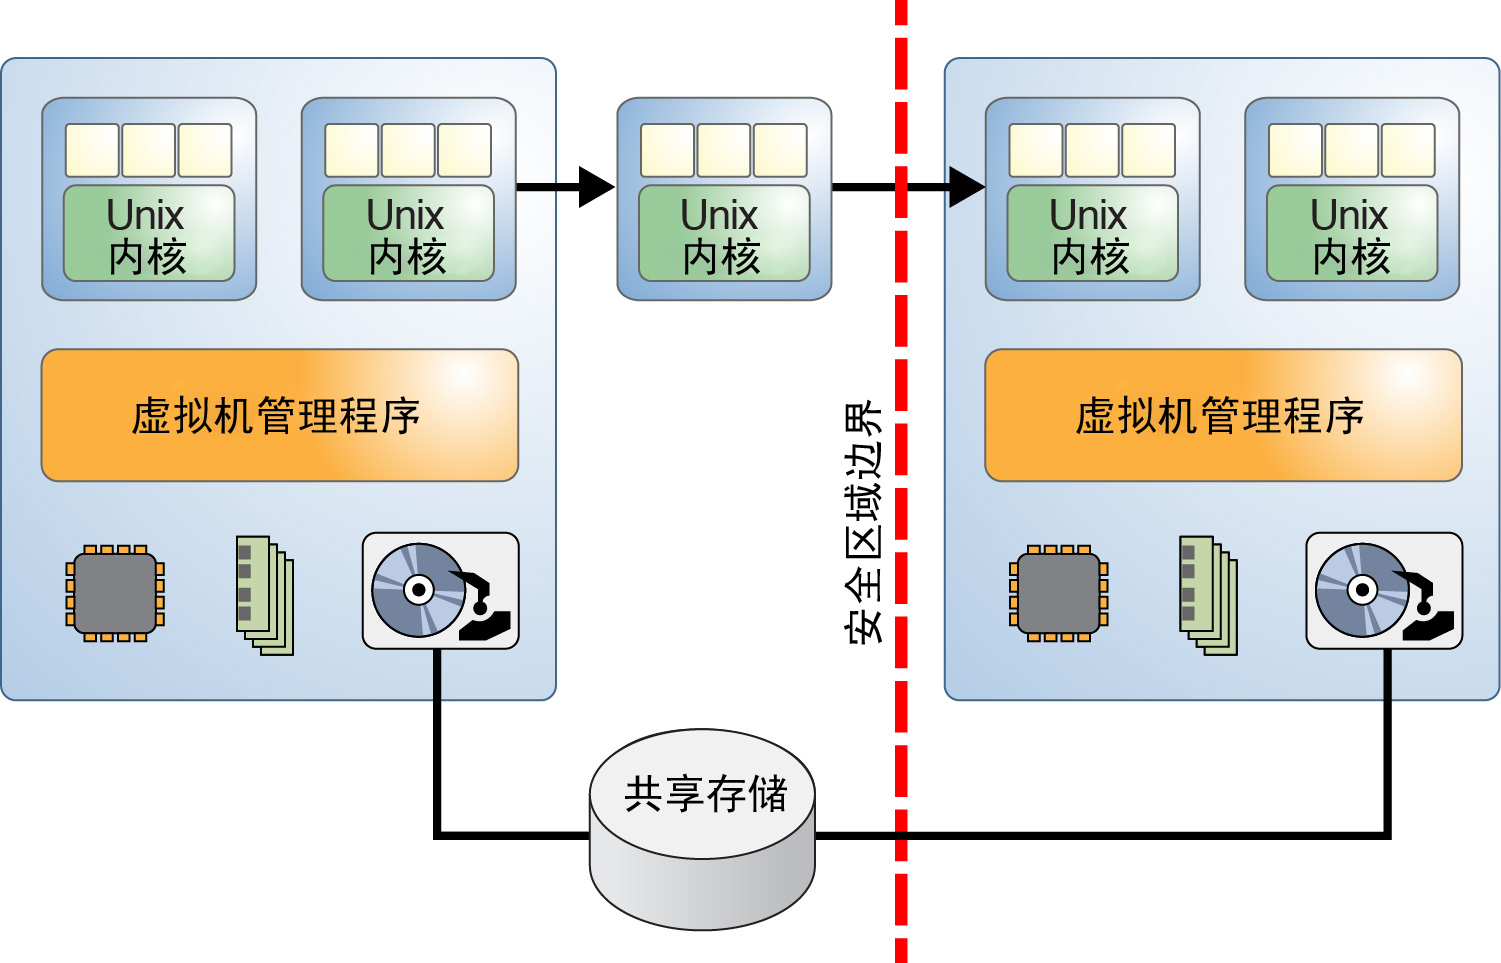 image:图中显示了两个通过安全类边界划分的虚拟化系统。